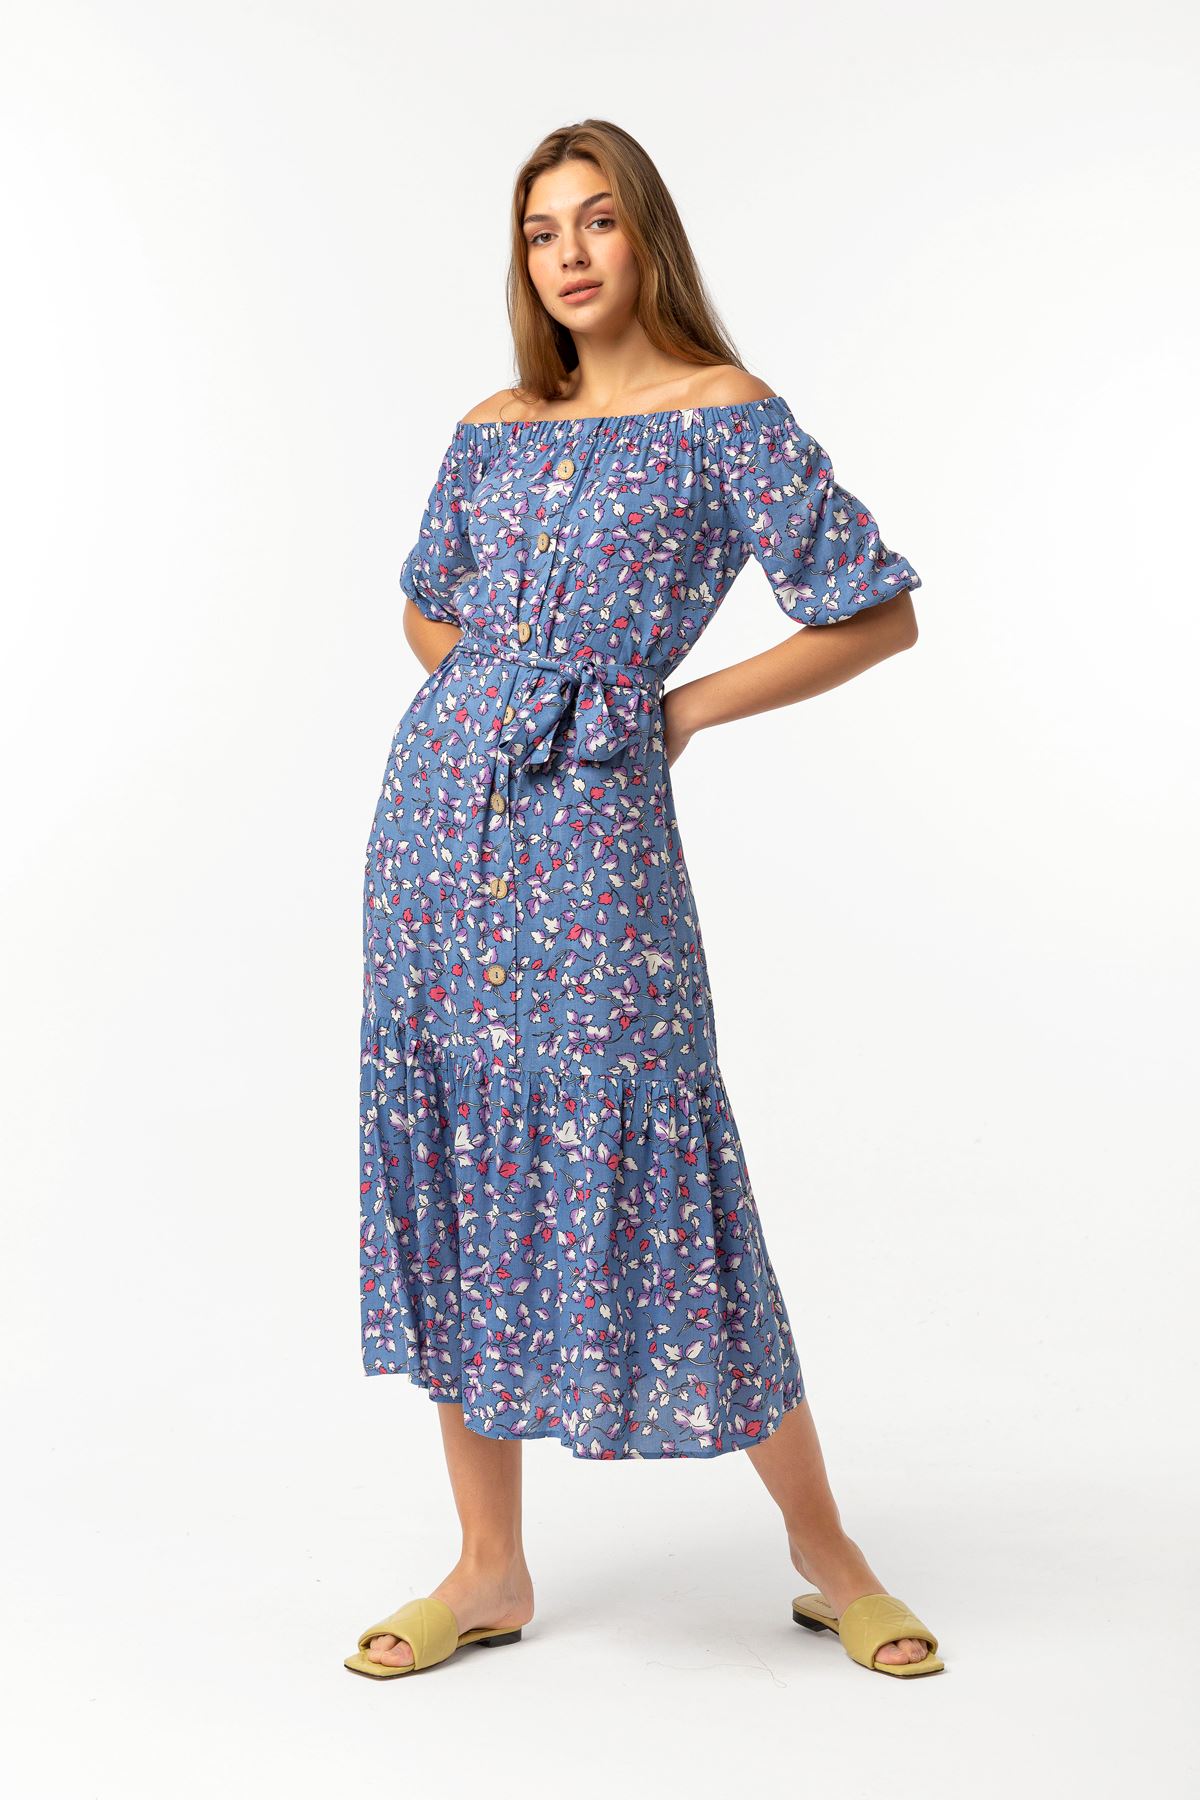 Viscose Fabric Short Sleeve Boat Neck Midi Comfy Flower Print Women Dress - Blue